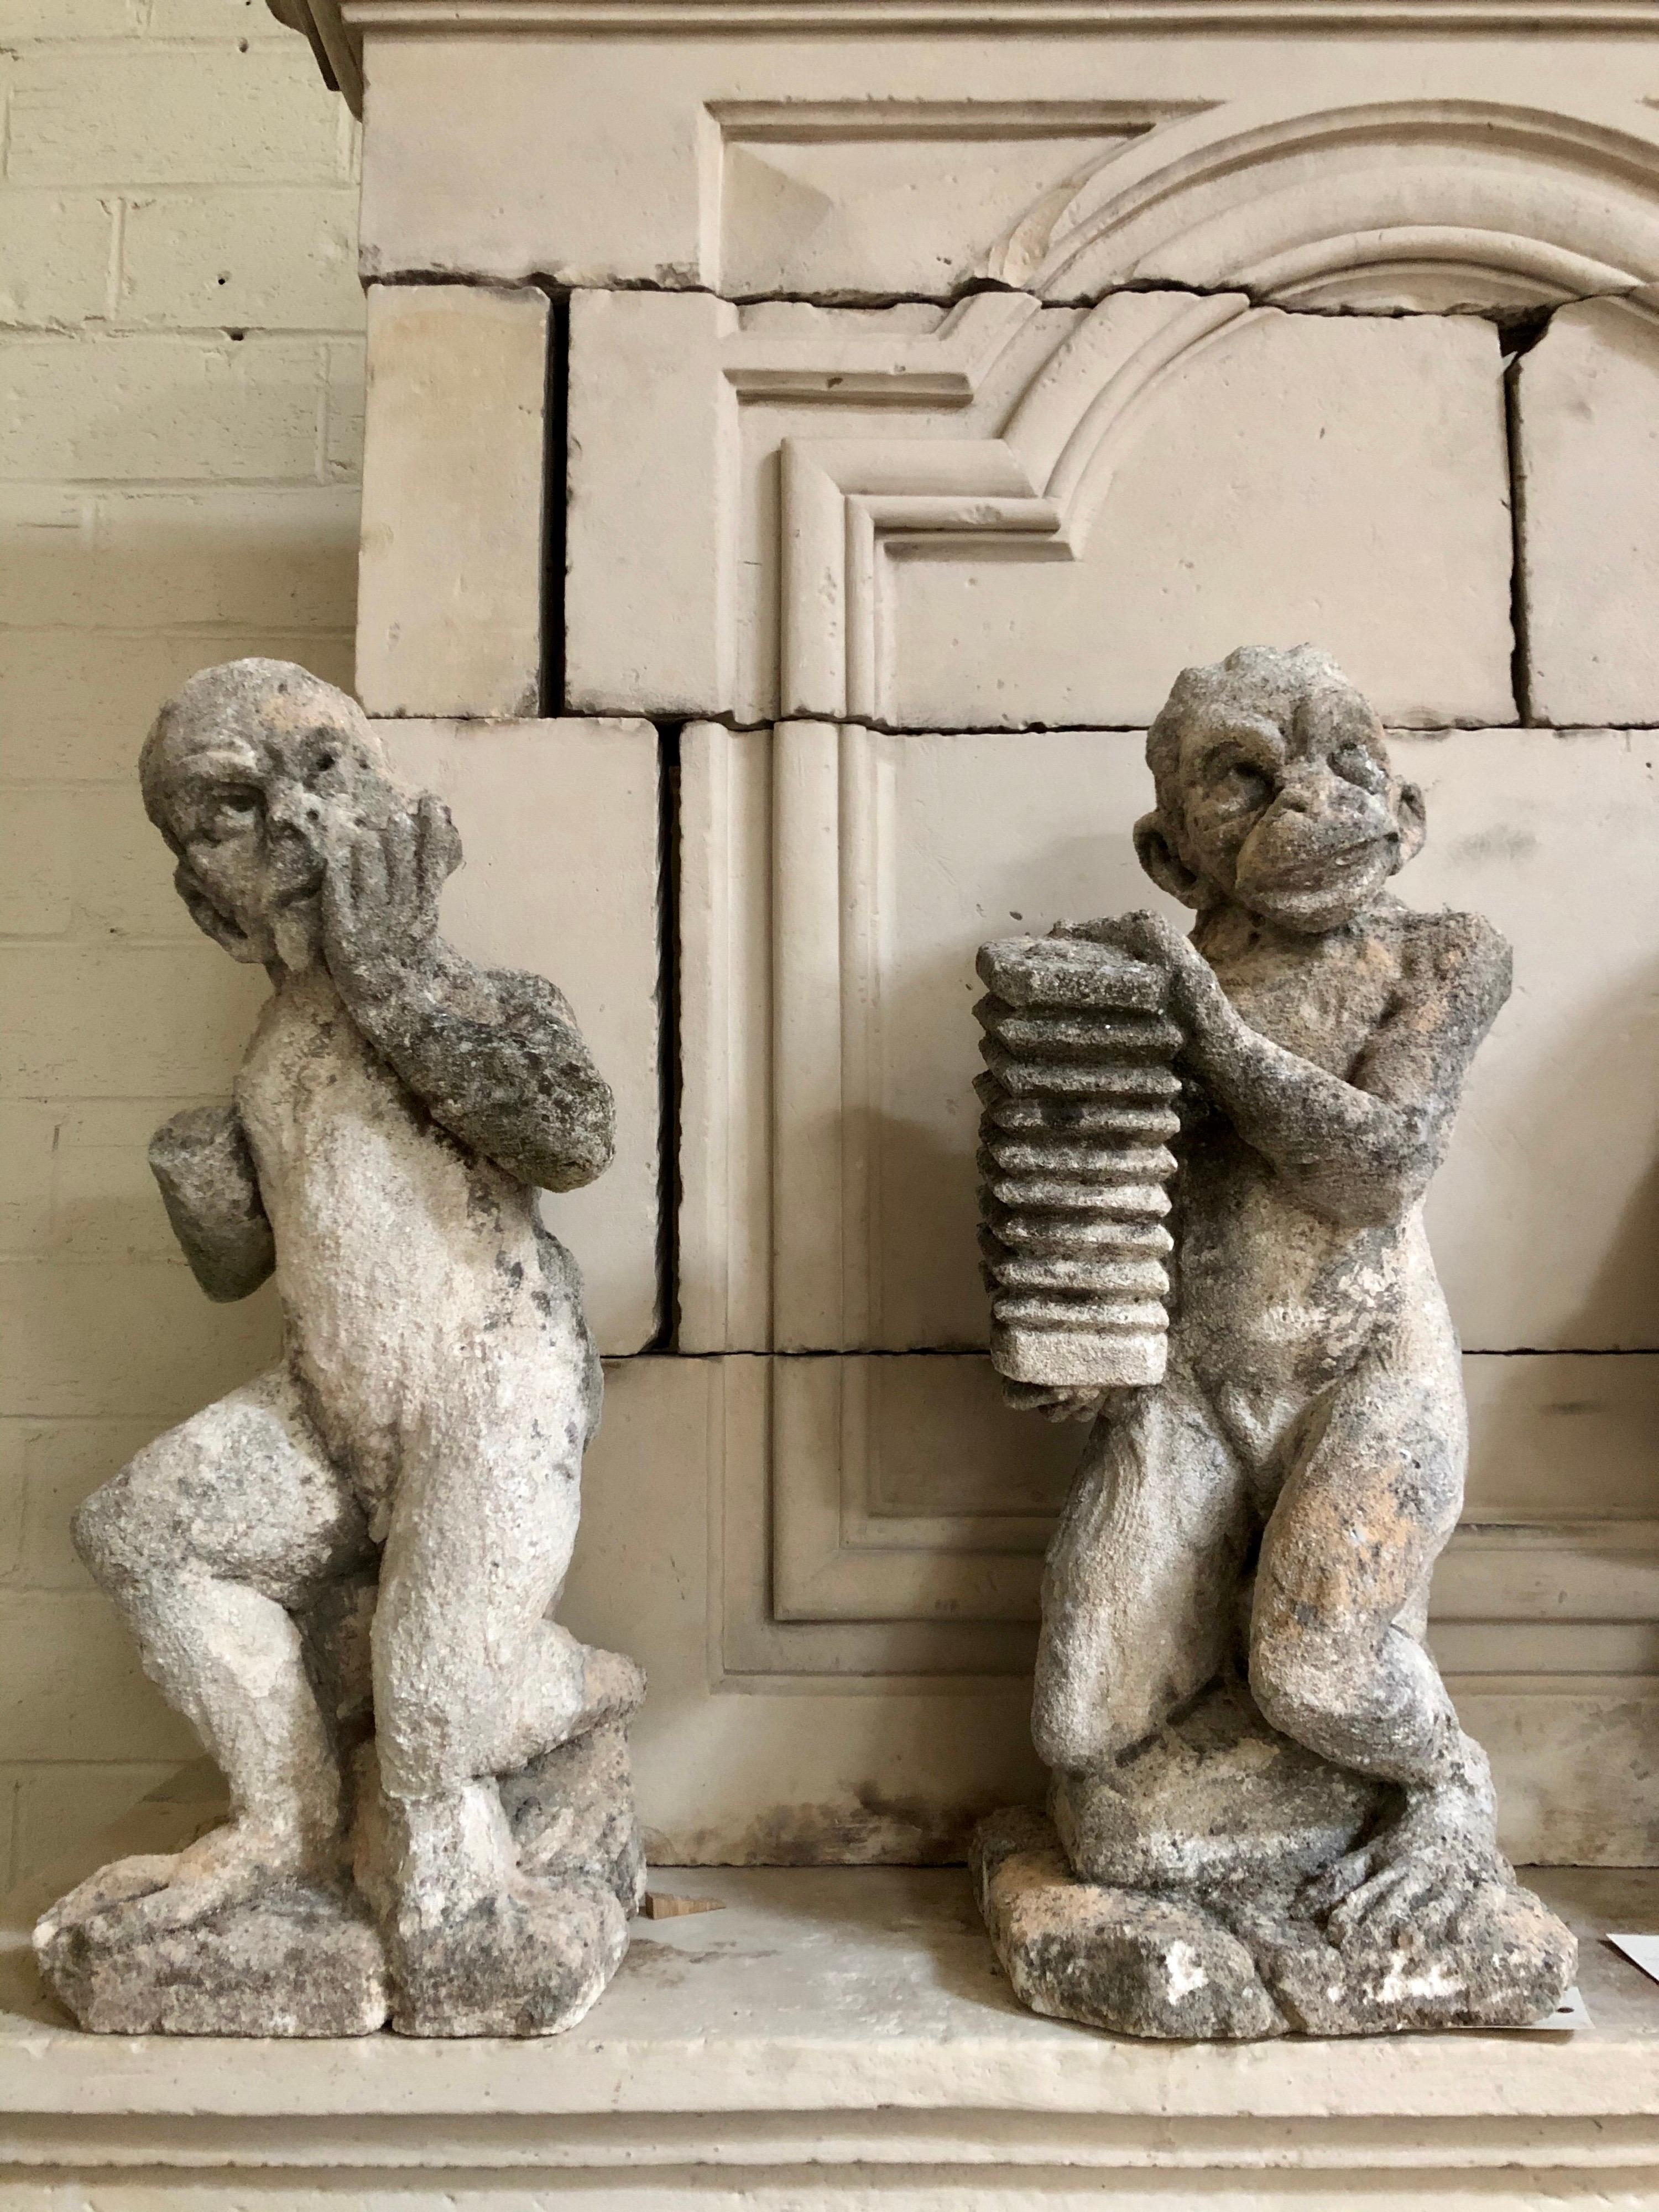 Those 4 monkeys limestone statues origin from Italy, circa 1850.